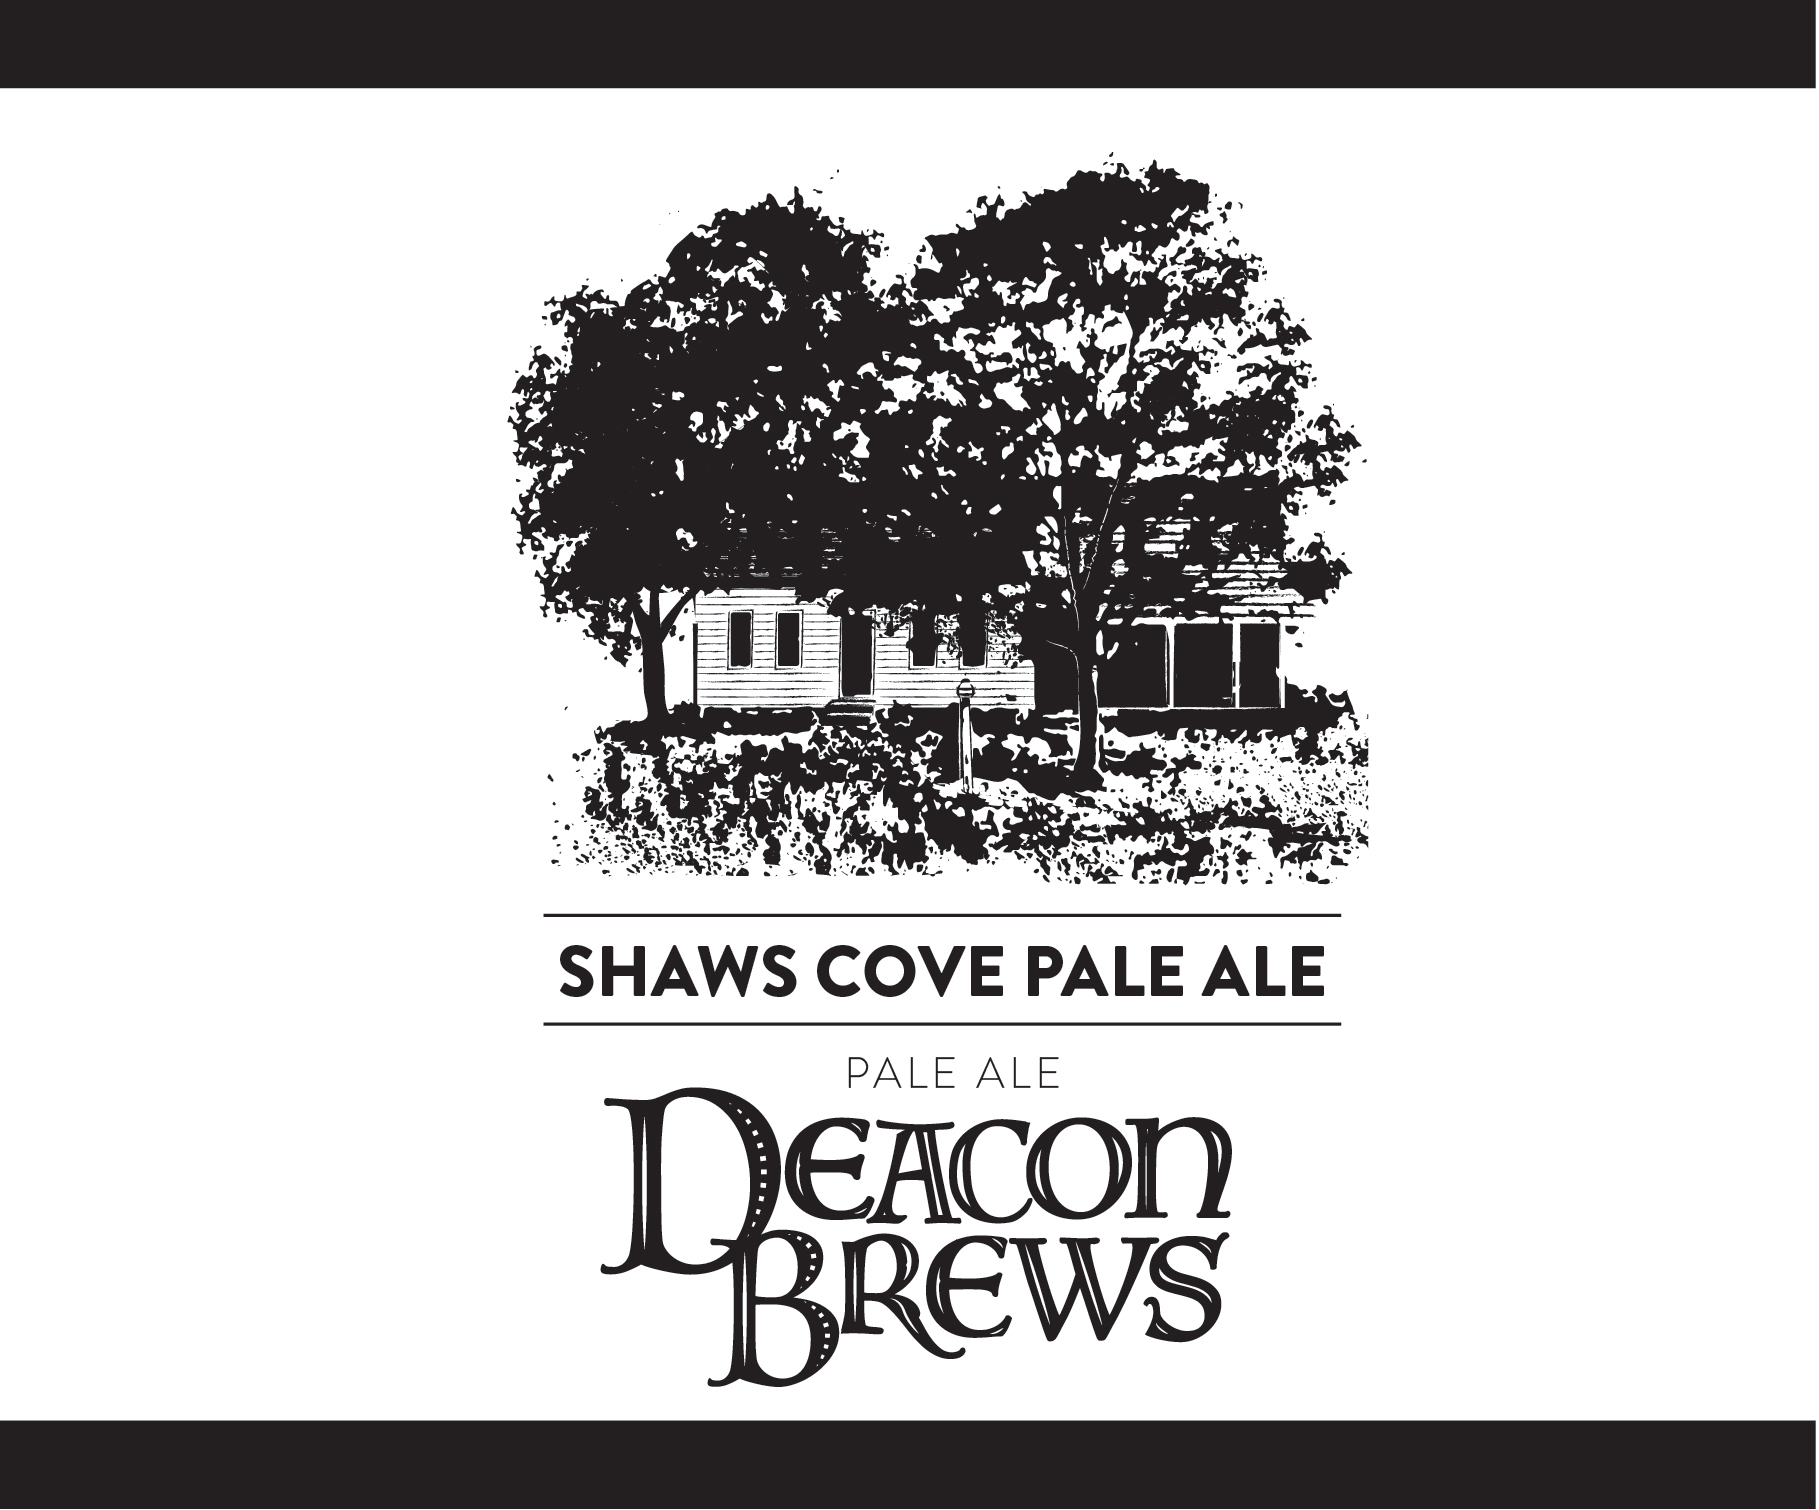 AveryLabels_Shaw's Cove Pale Ale.jpg